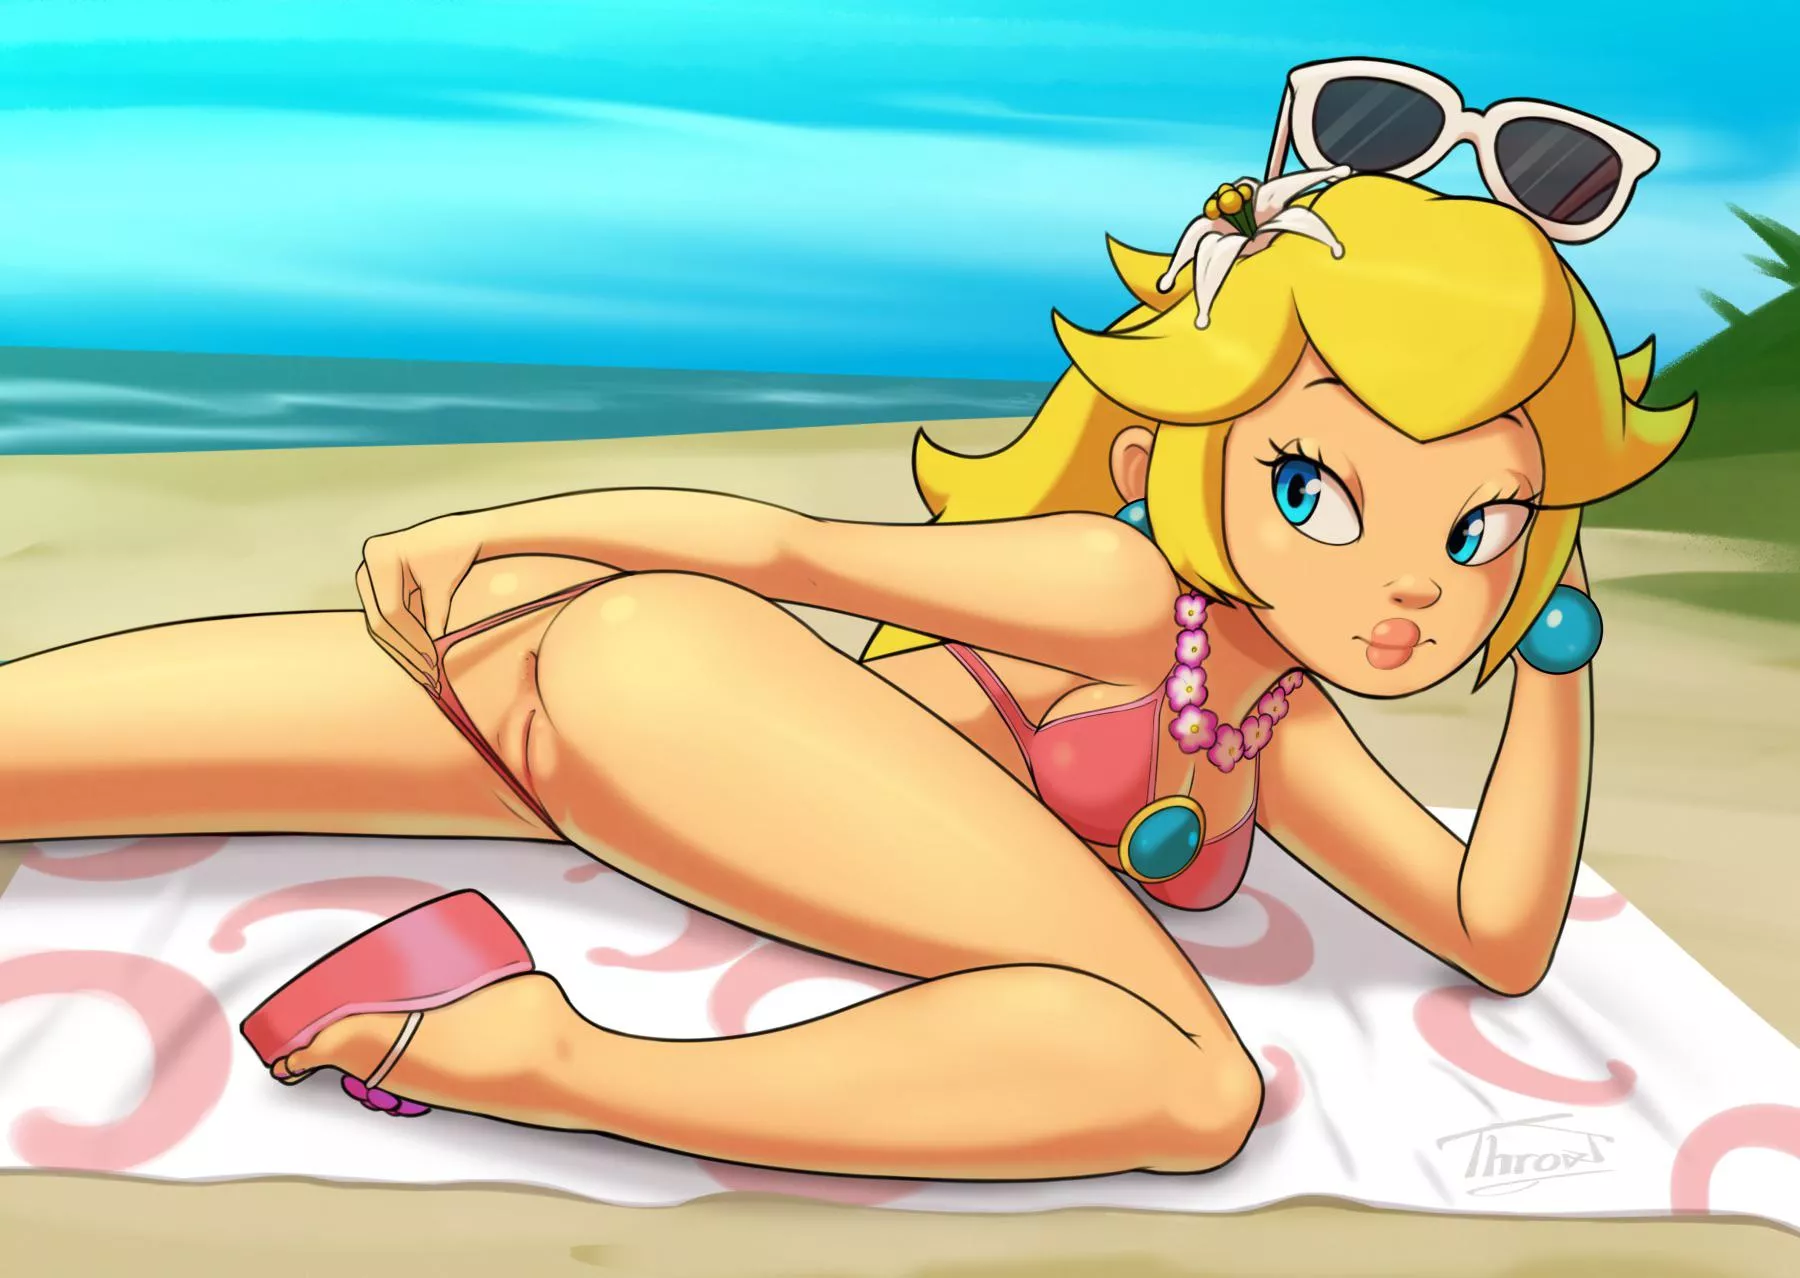 Princess Peach Naked - Princess Peach [Super Mario](Throat) nudes : rule34 | NUDE-PICS.ORG